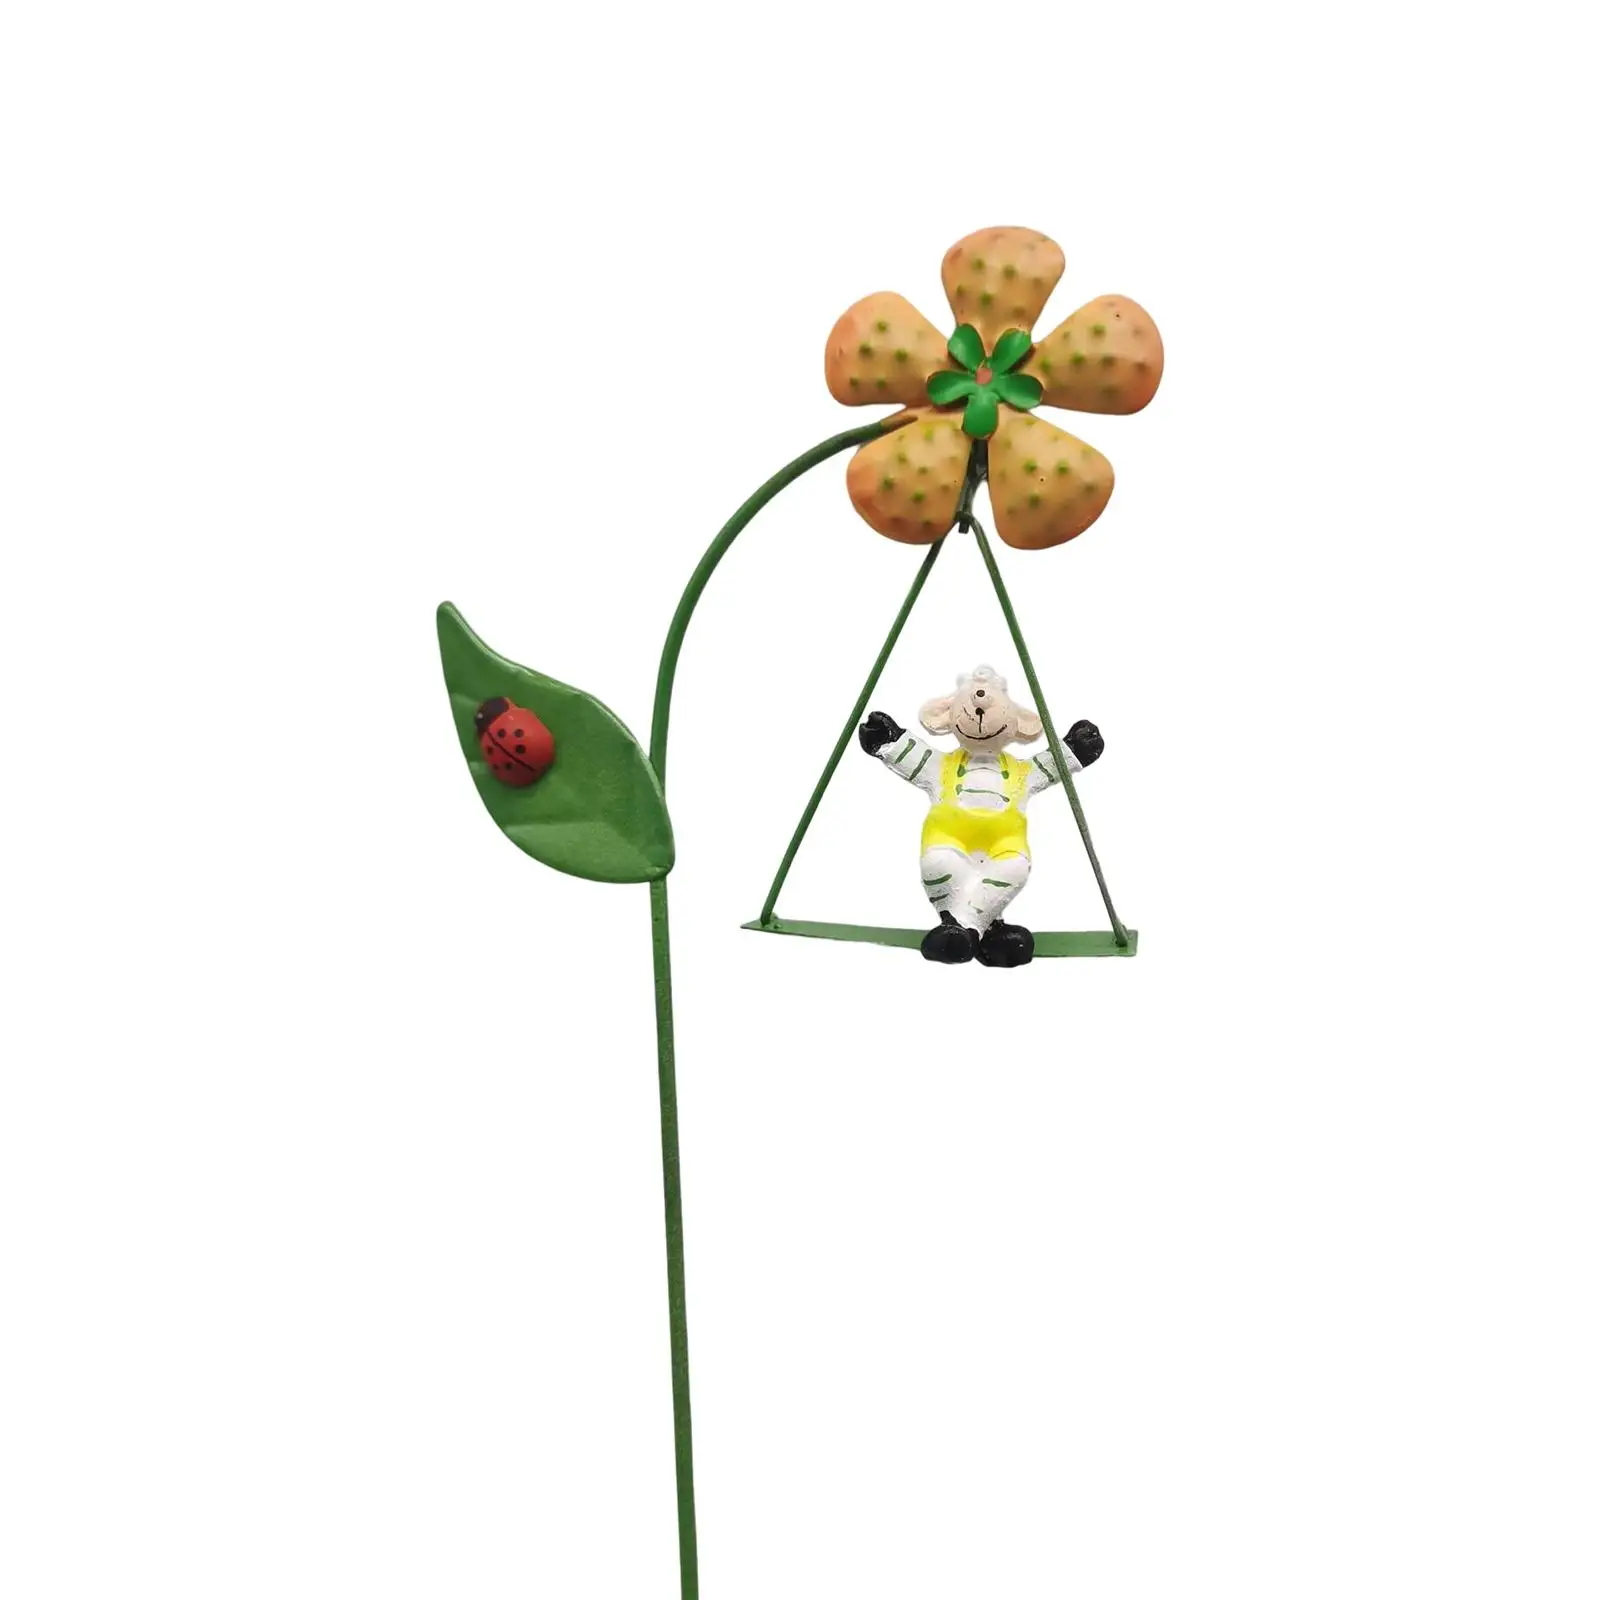 Imitation Plant Flower Decor, Swing Ornament, Creative Iron Artificial Miniature